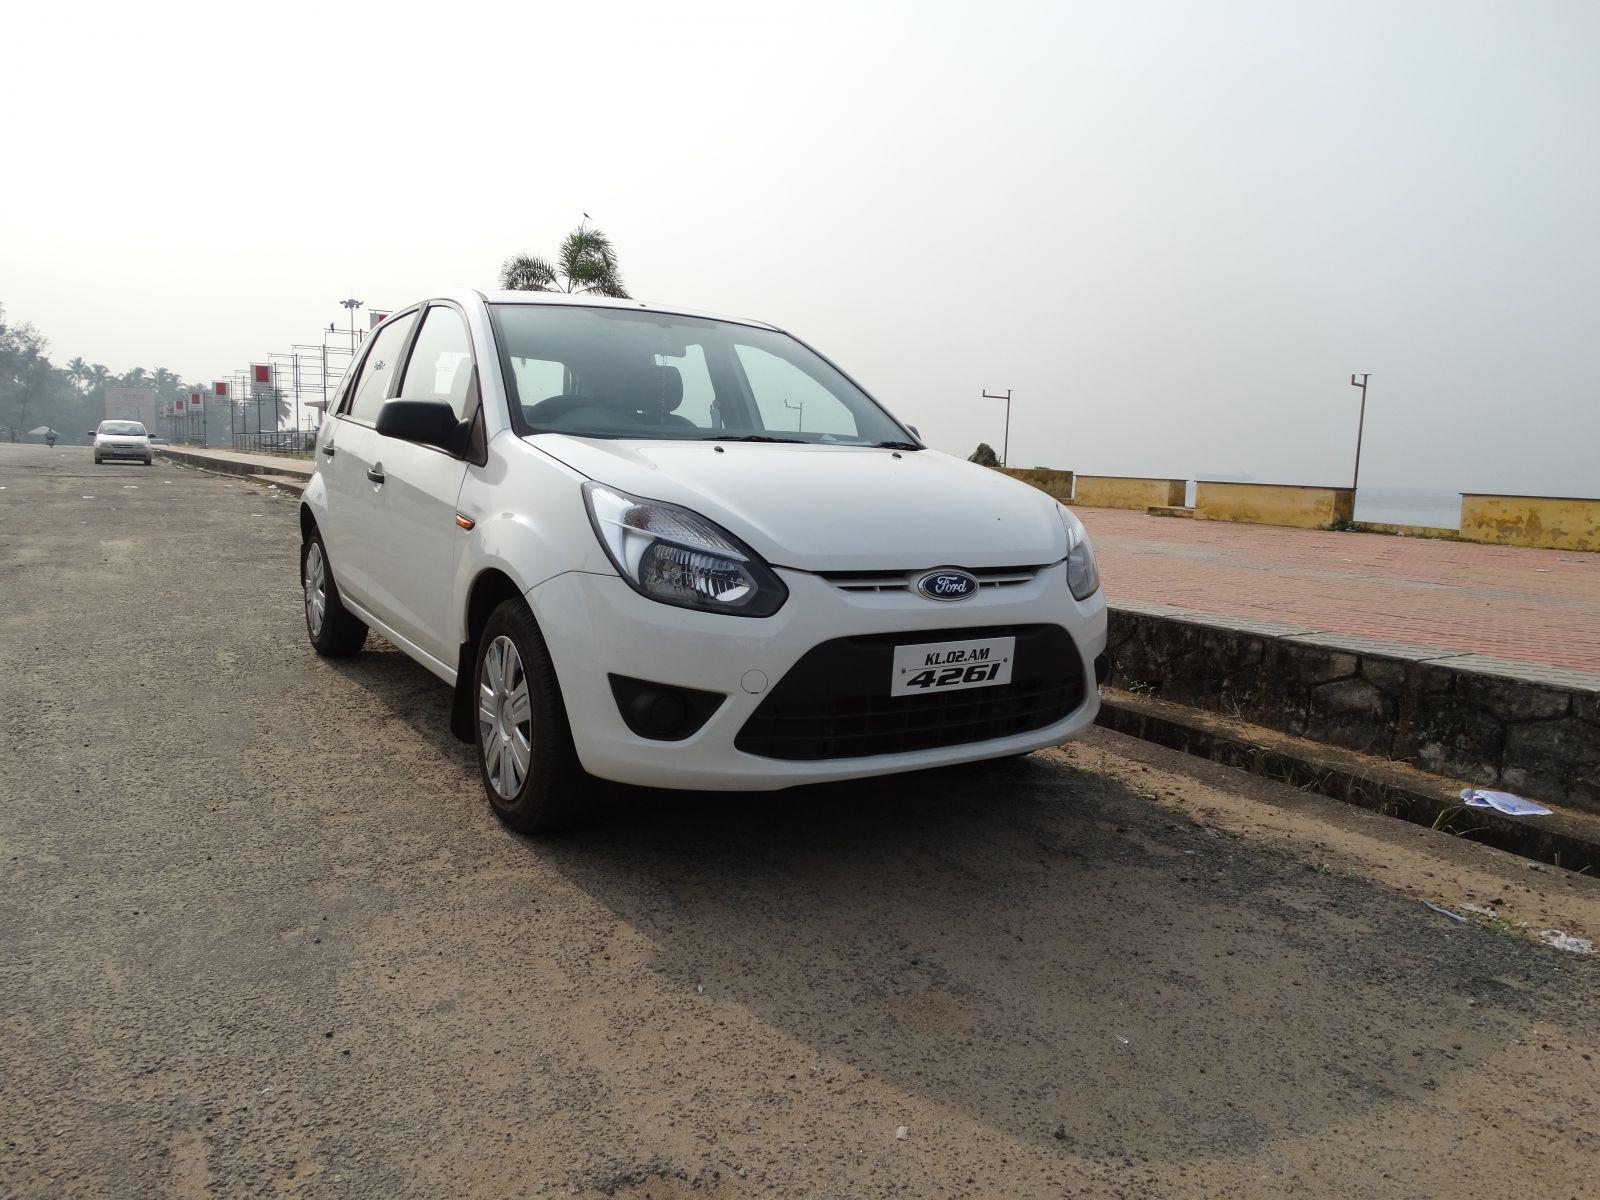 Ford Figo TDCi @ Kollam Beach, Keralam, India